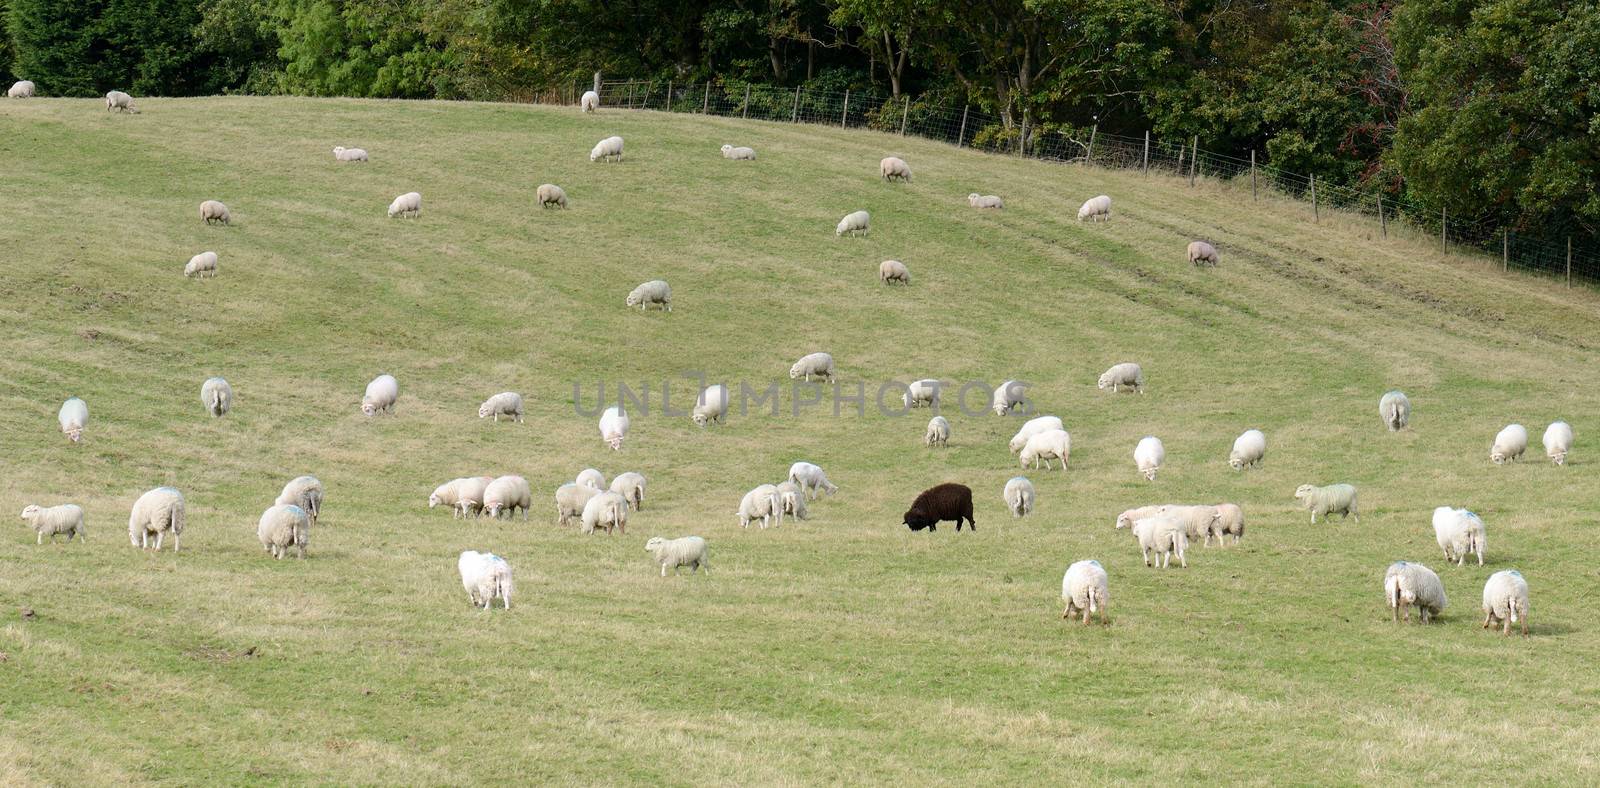 One black sheep by hyrons